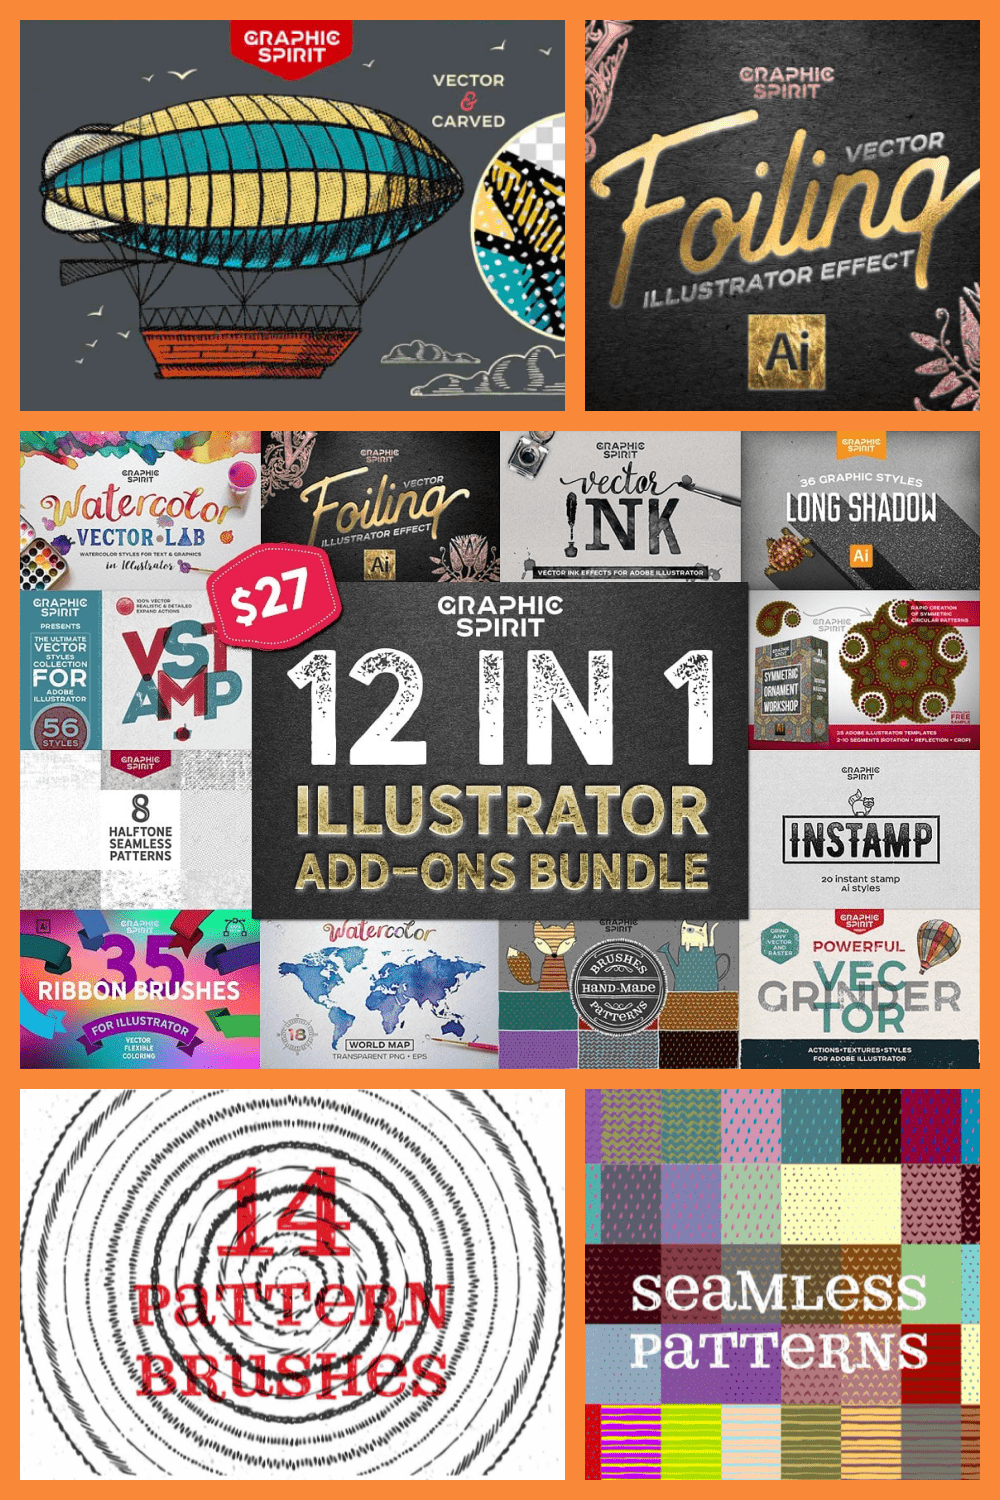 12 in 1 Adobe Illustrator Add-ons Bundle - just $27 - MasterBundles - Pinterest Collage Image.